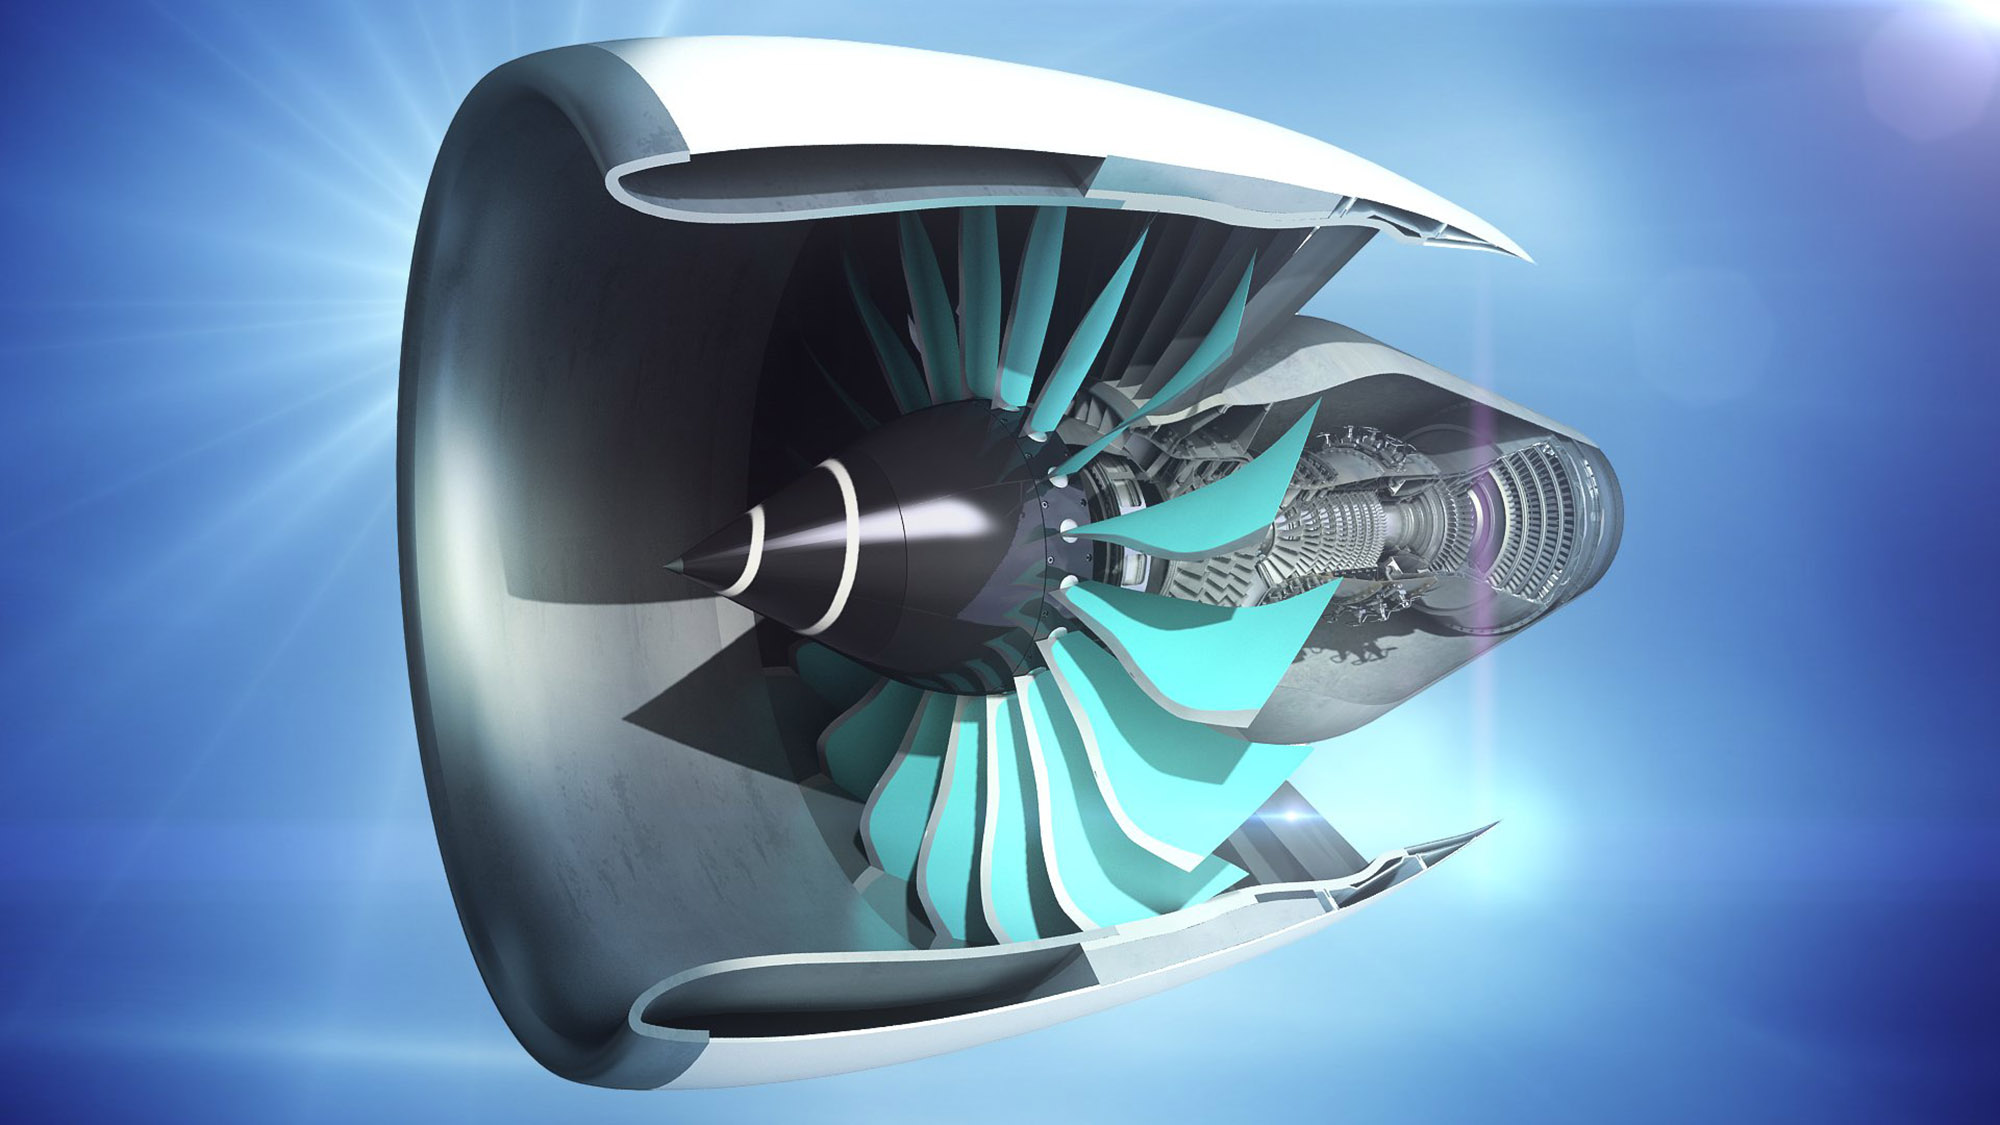 An illustration of the&nbsp;UltraFan engine.